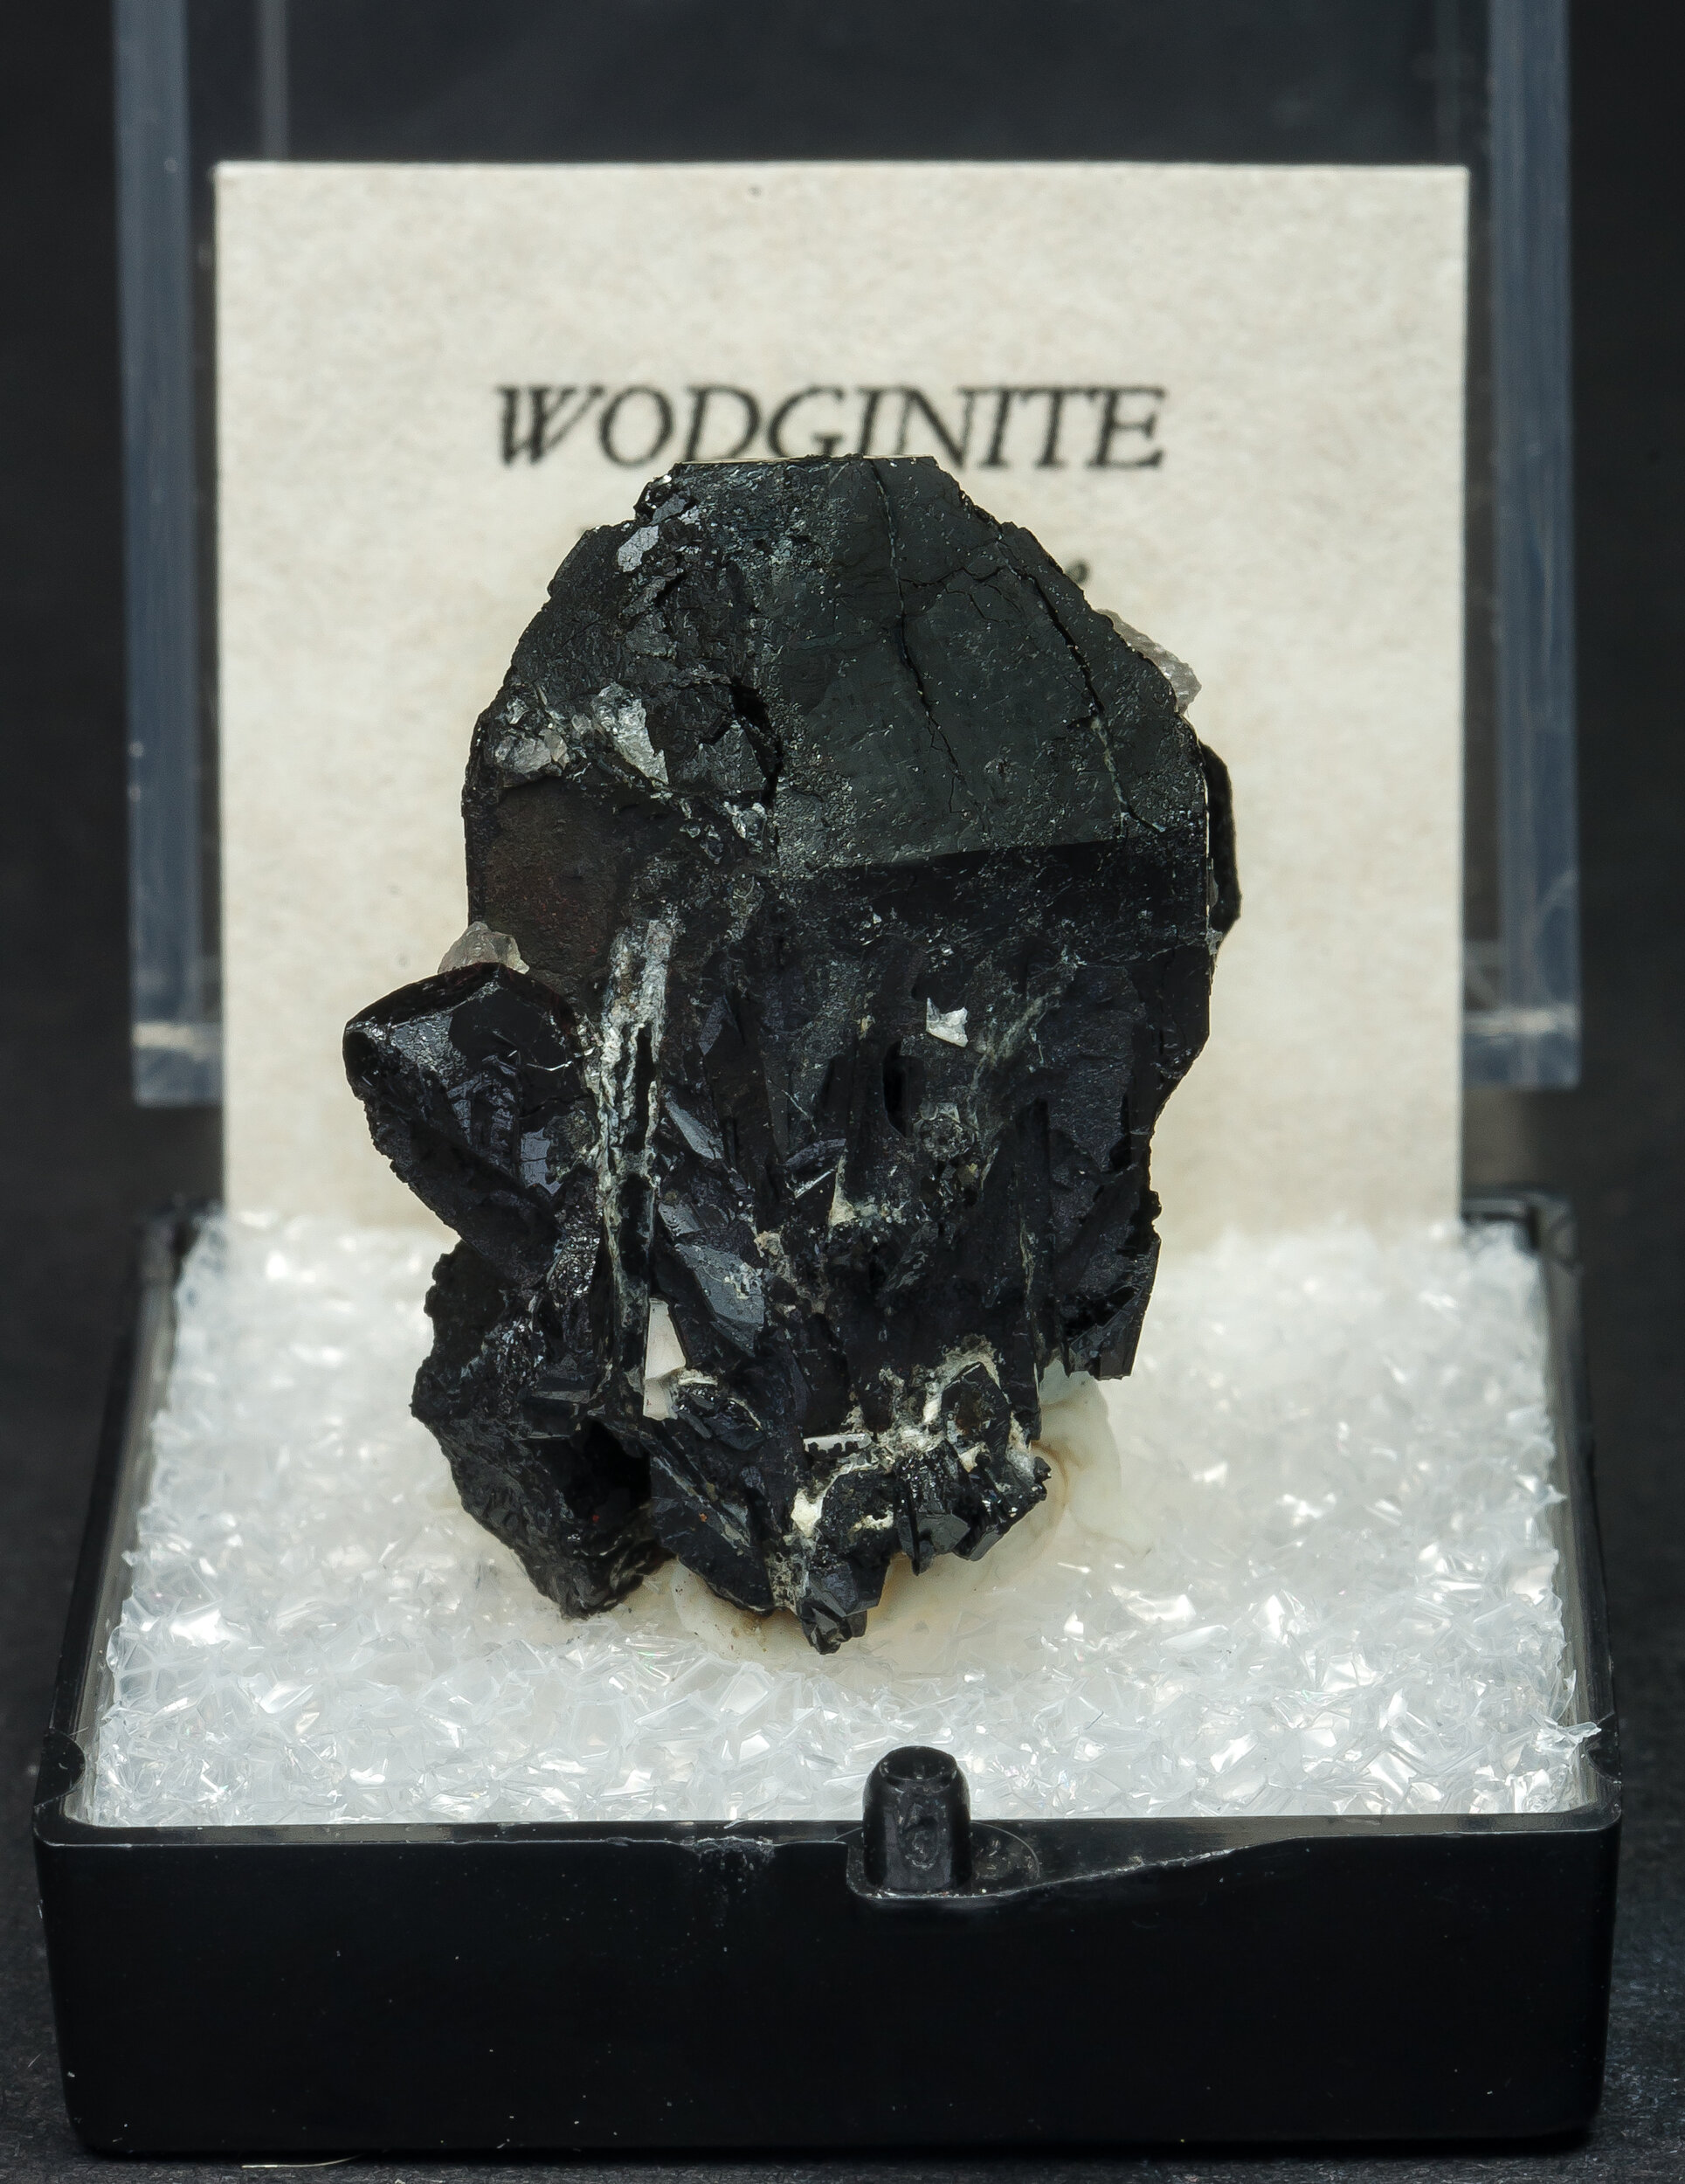 specimens/s_imagesAO2/Wodginite-TBB47AO2f1.jpg